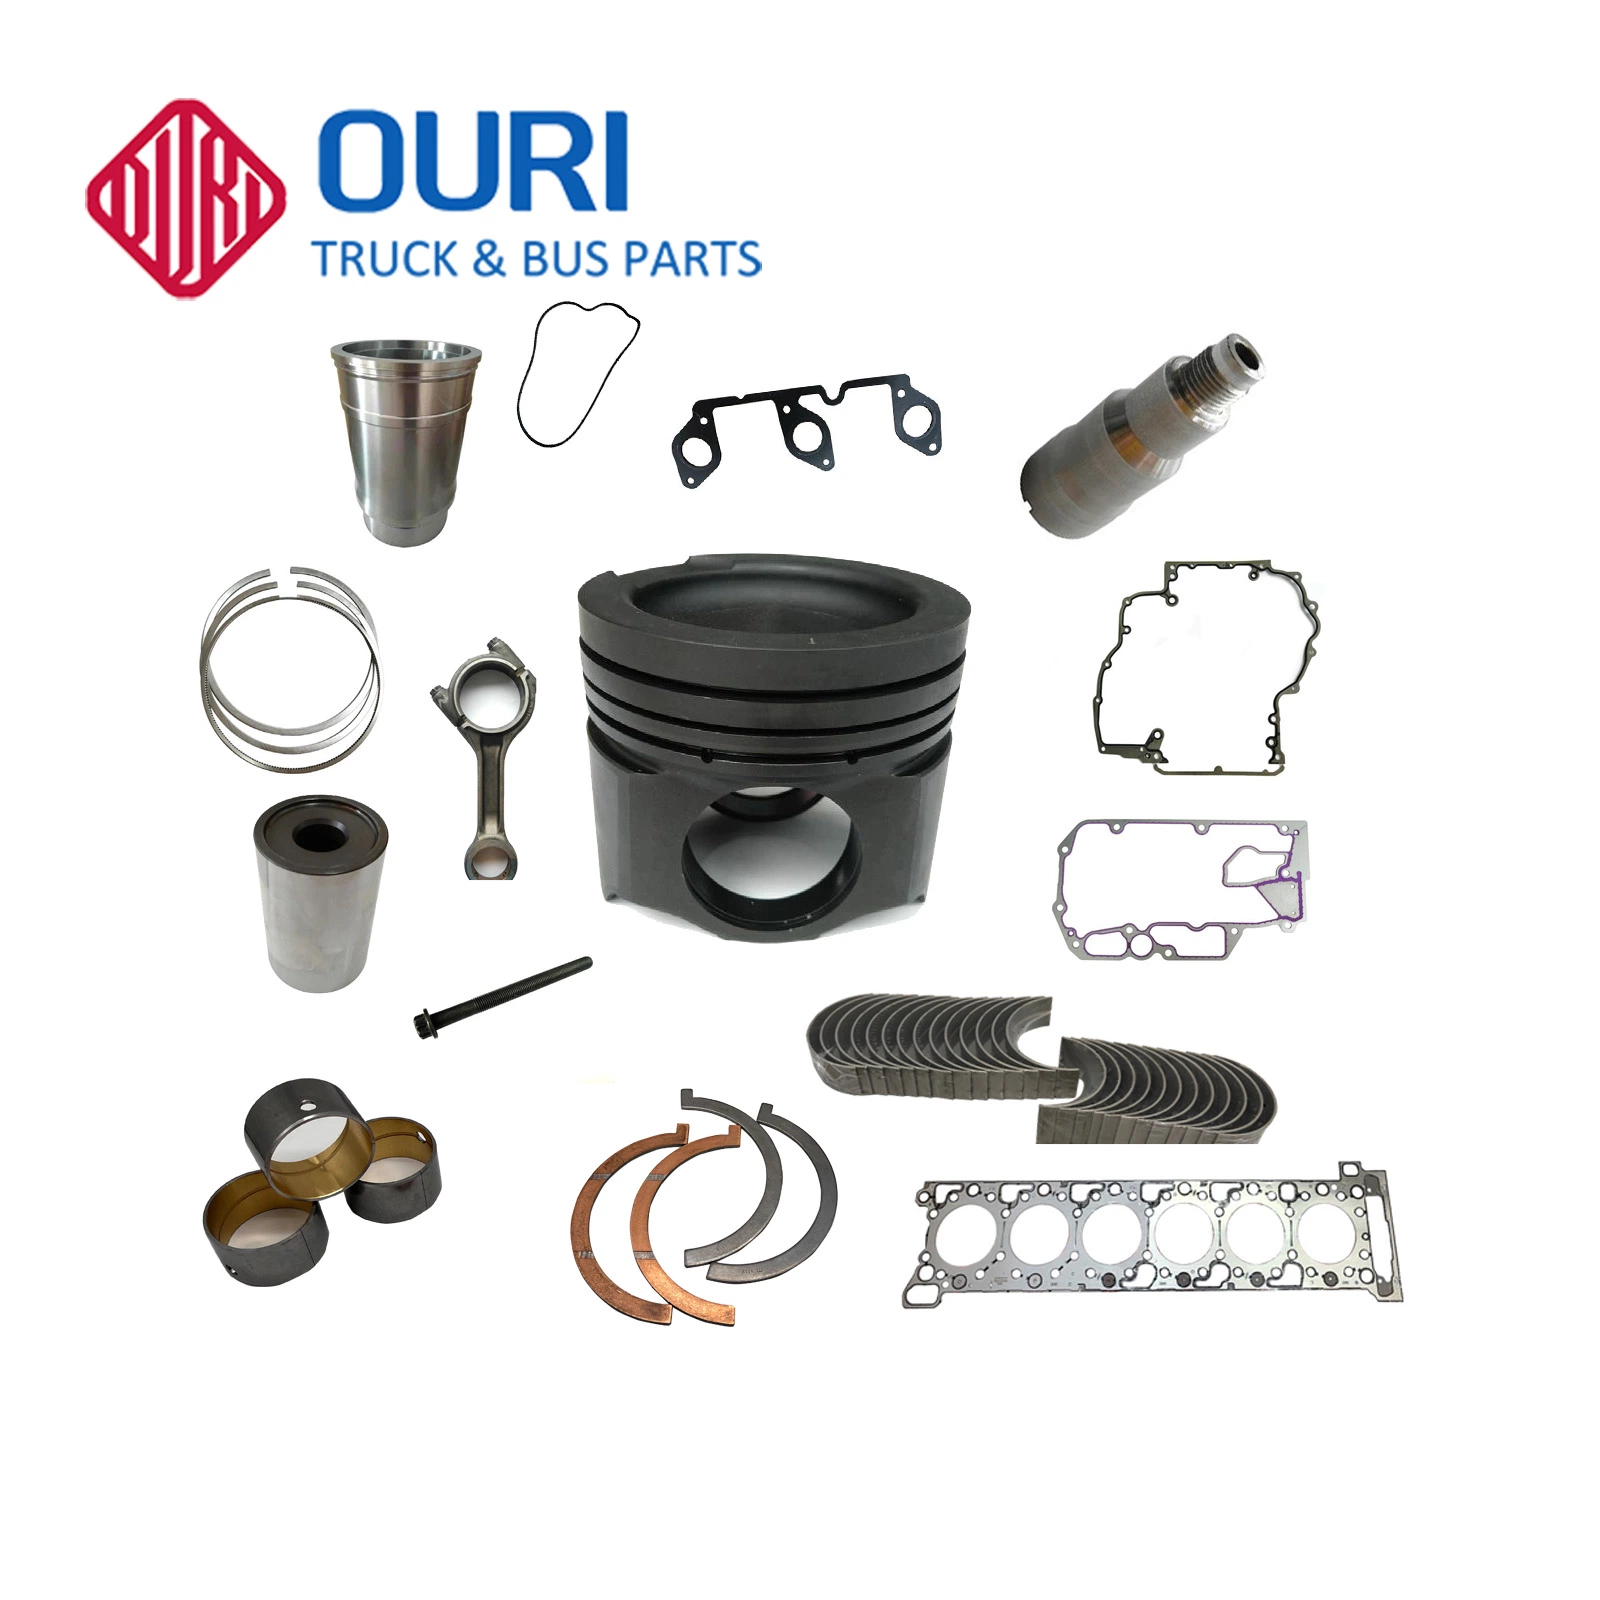 Ouri Heavy Truck Parts Engine Parts for European Truck Mercedes Benz MP4 Dd15 Man Truck